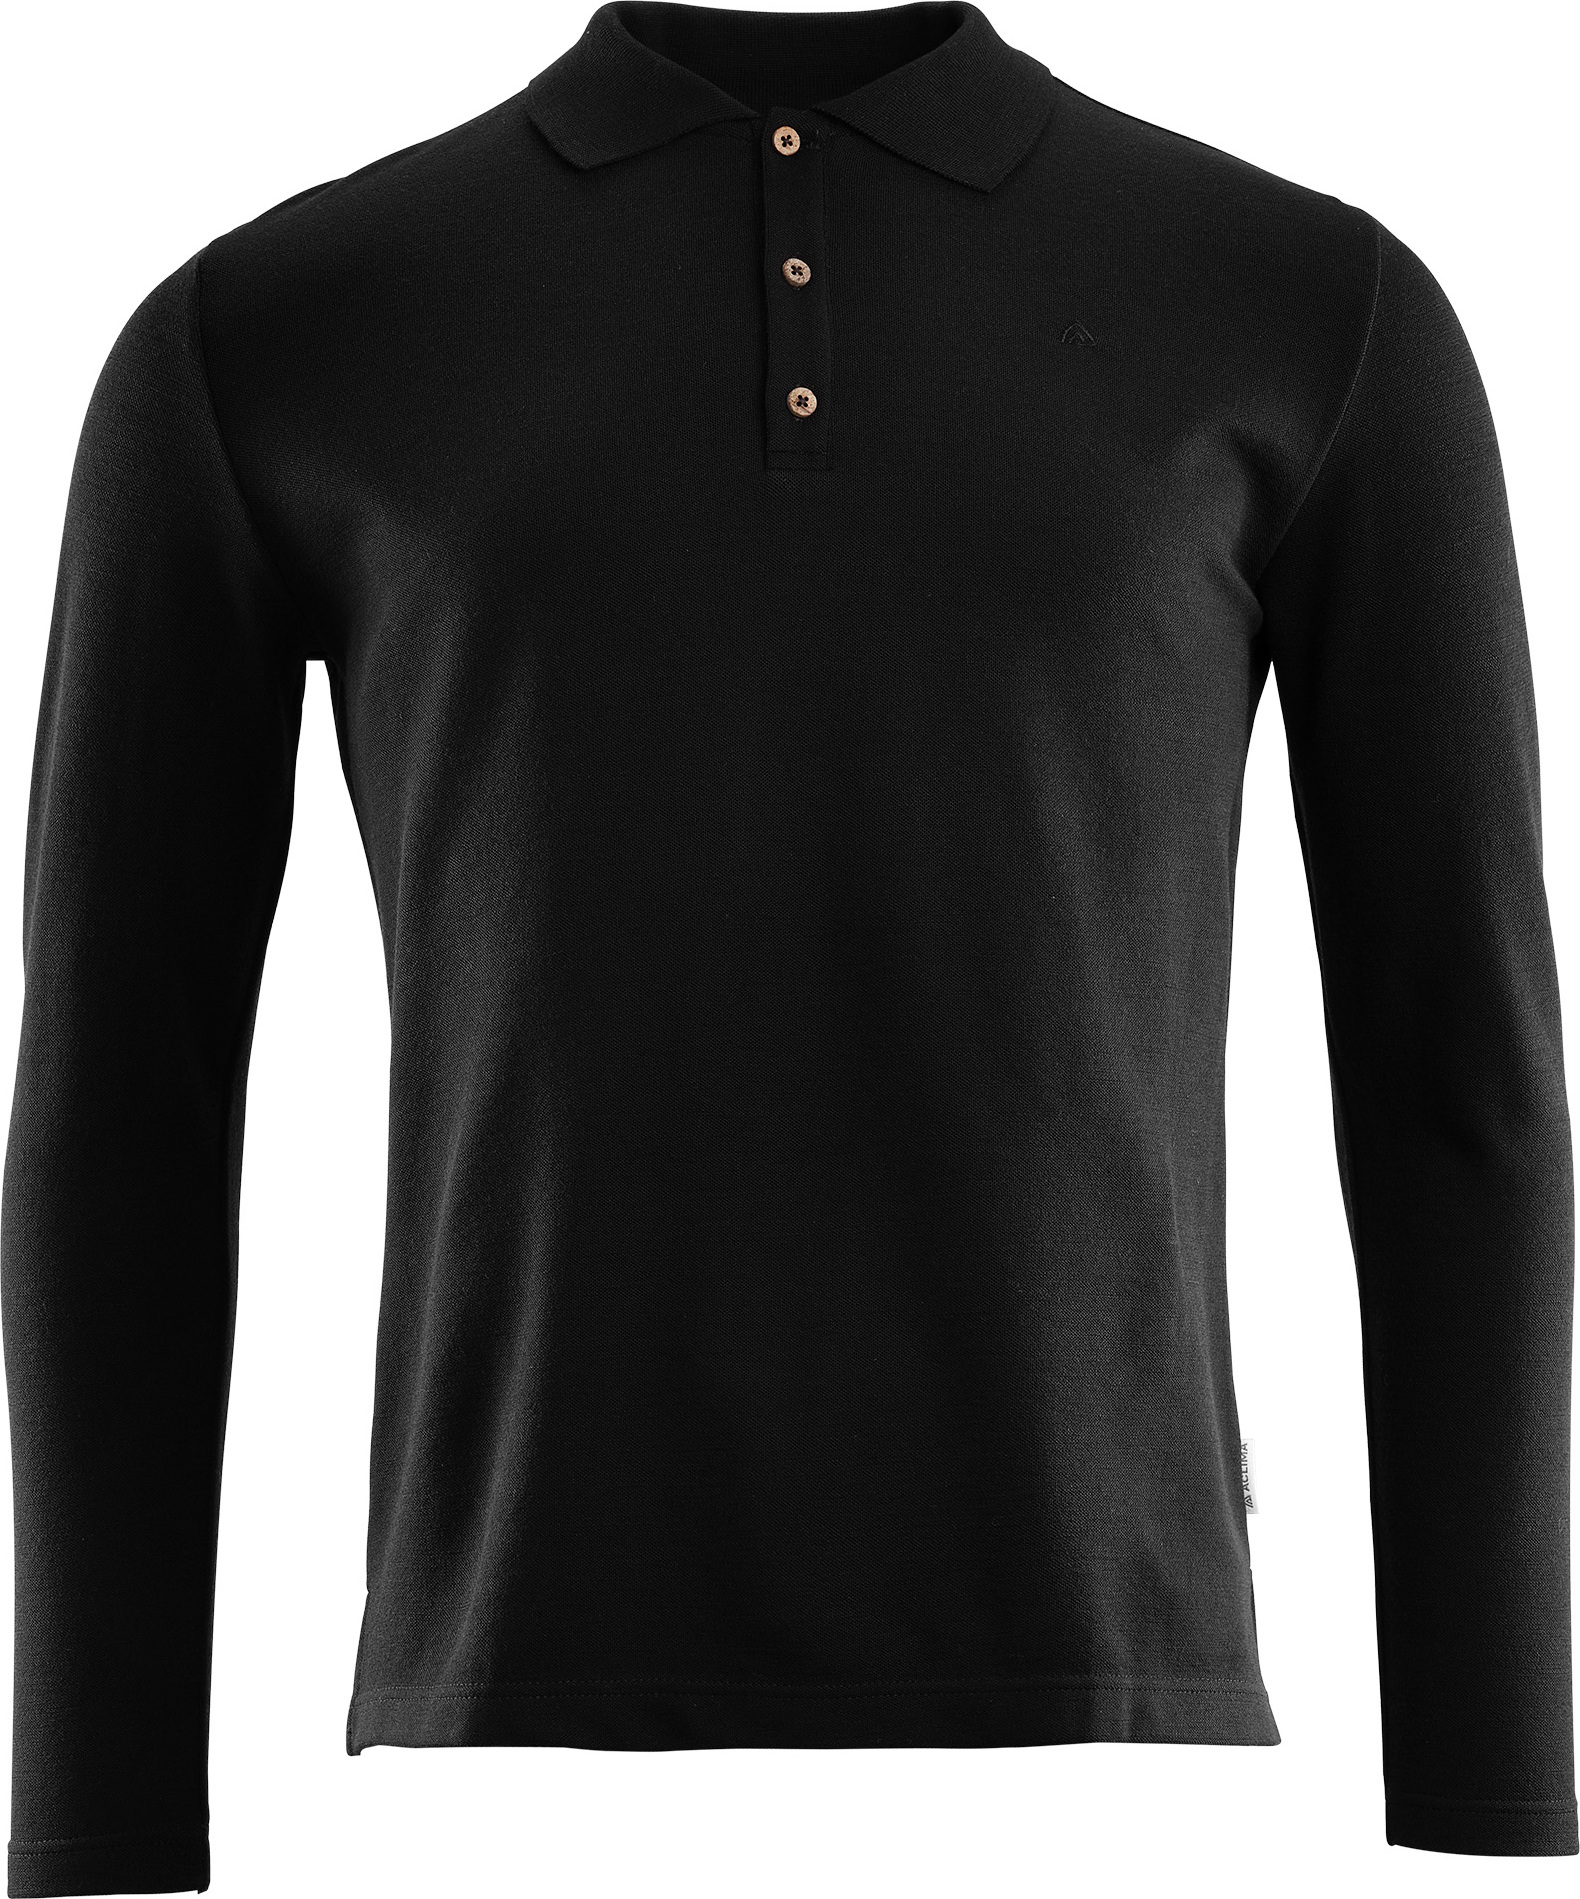 Aclima Aclima Men's LeisureWool Pique Shirt Long Sleeve Jet Black L, Jet Black